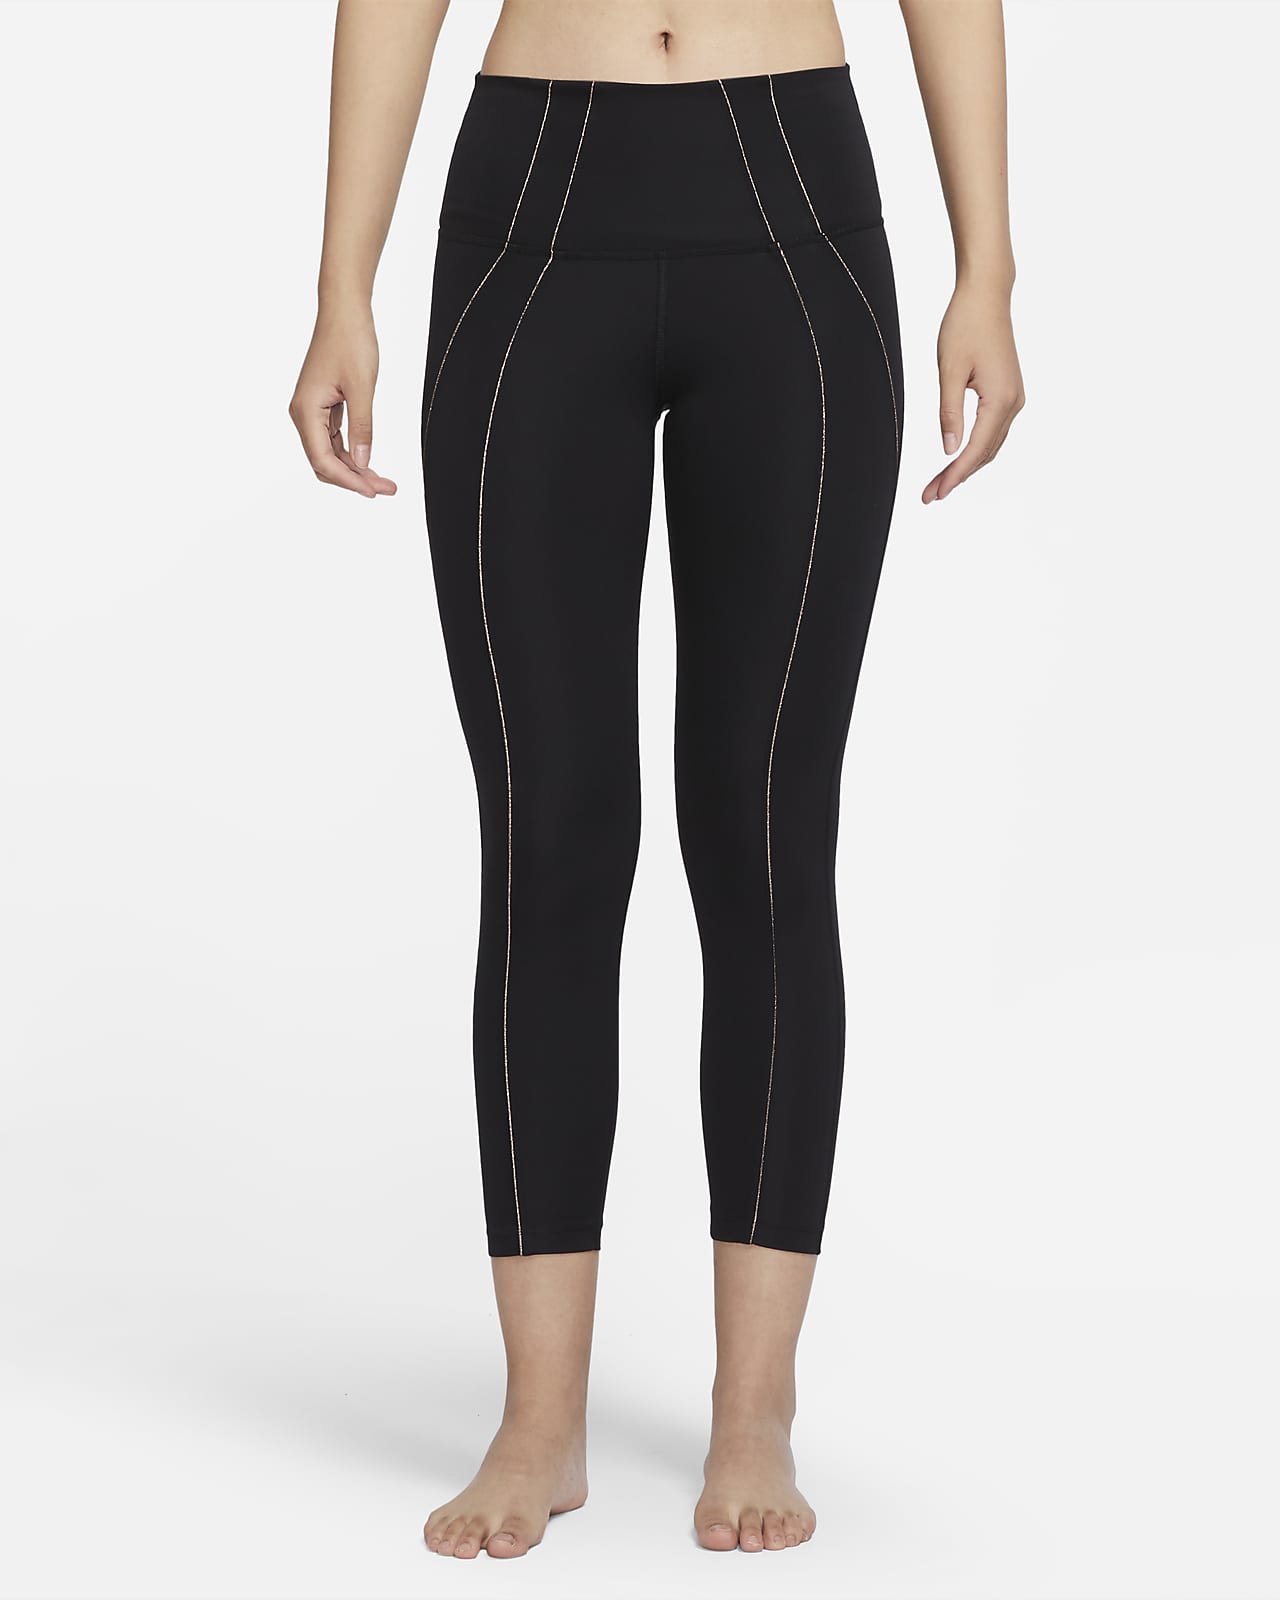 Nike Yoga Dri-FIT Metallic Trim 7/8 女子高腰紧身裤